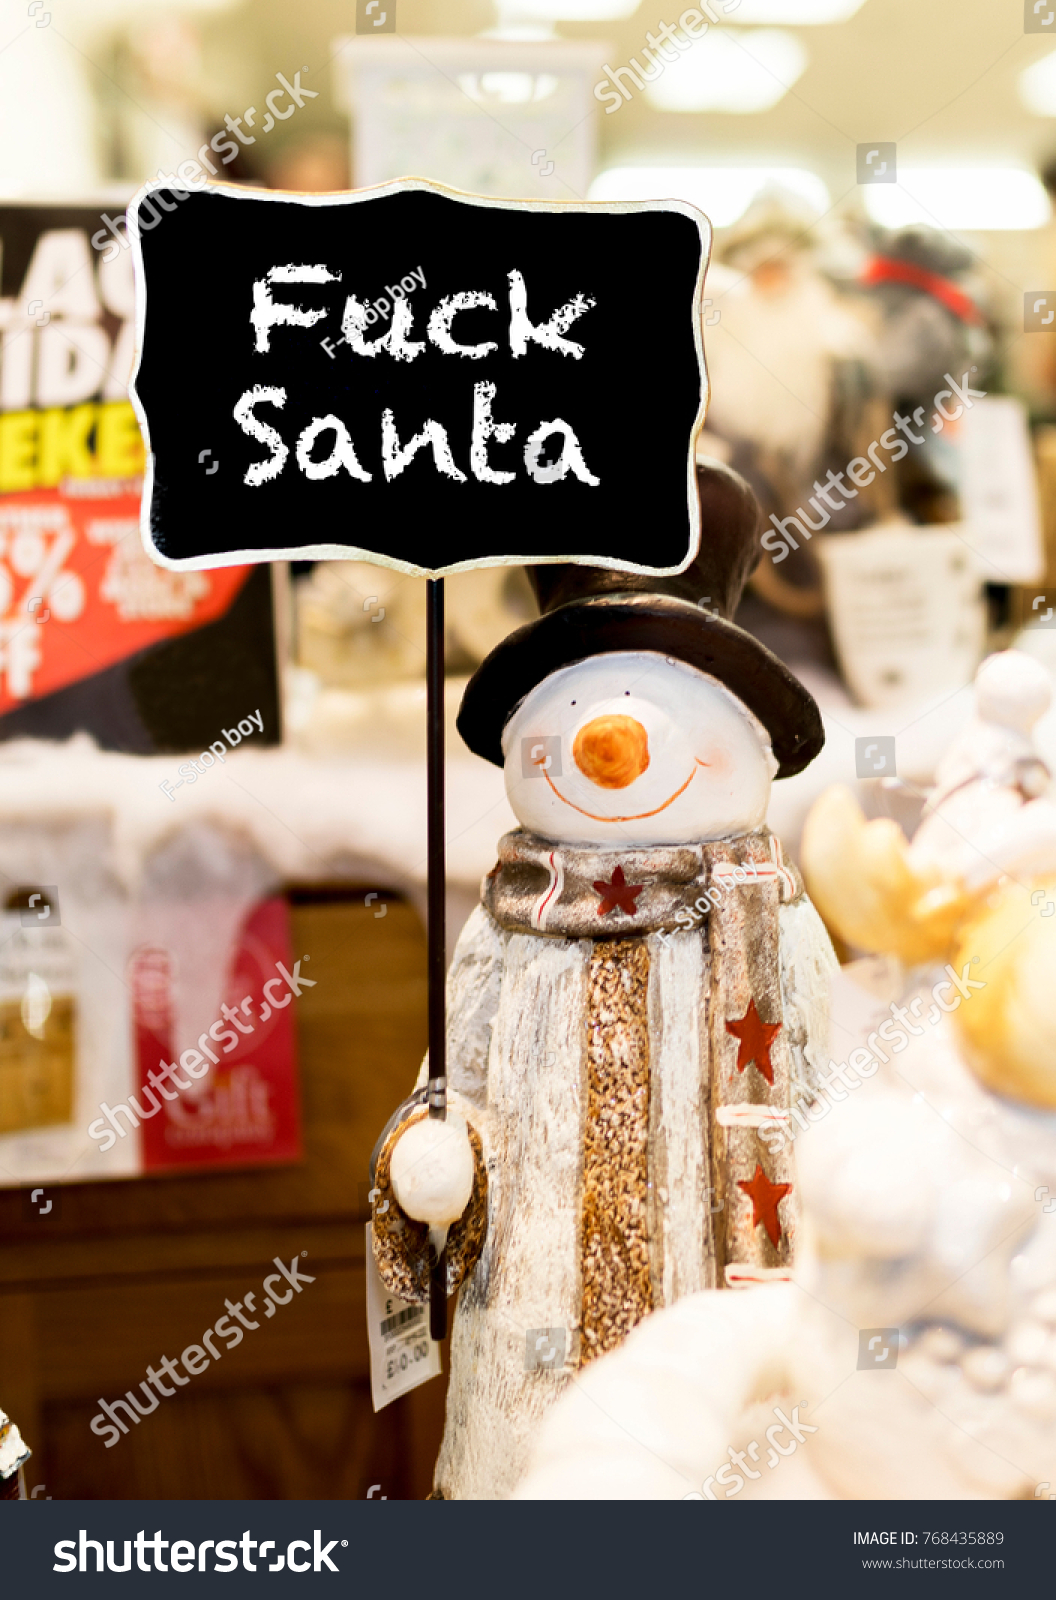 Fucking Snowman